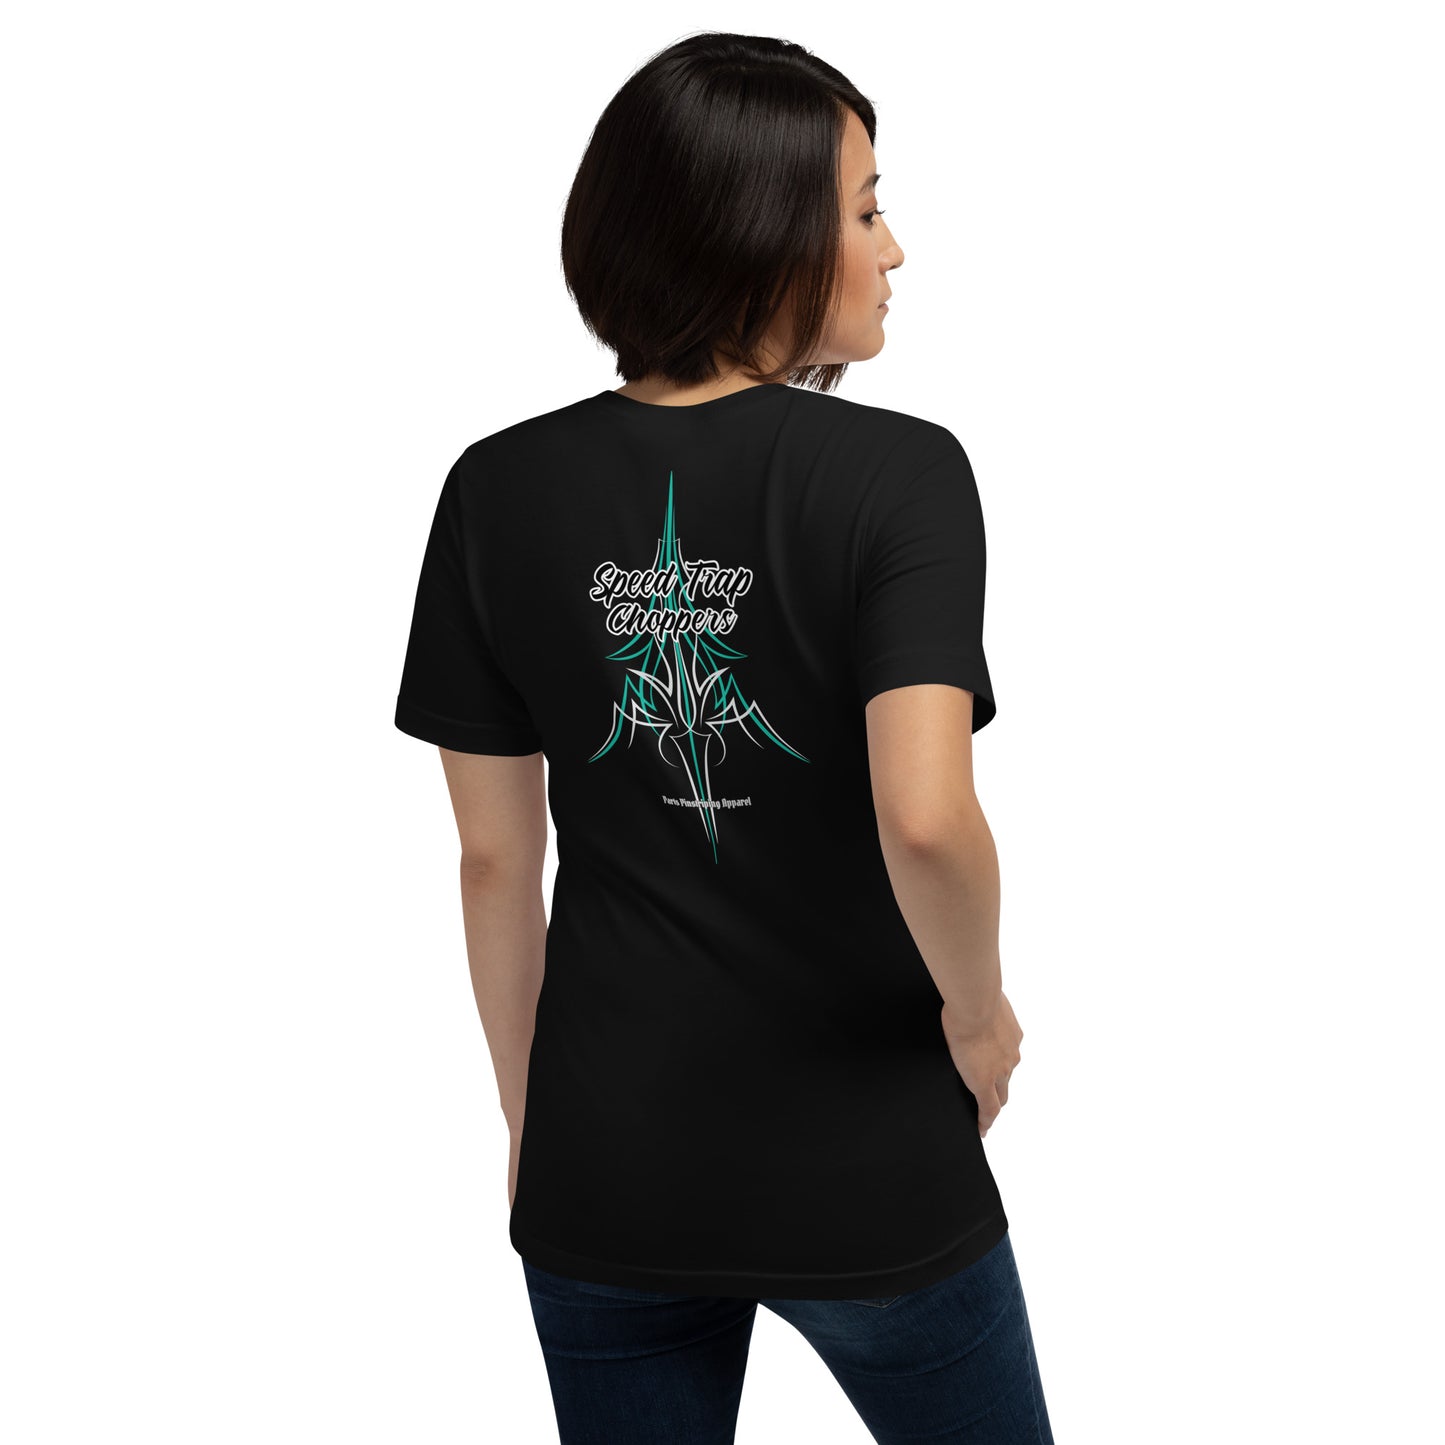 Womens STC Pinstripe design T-shirt